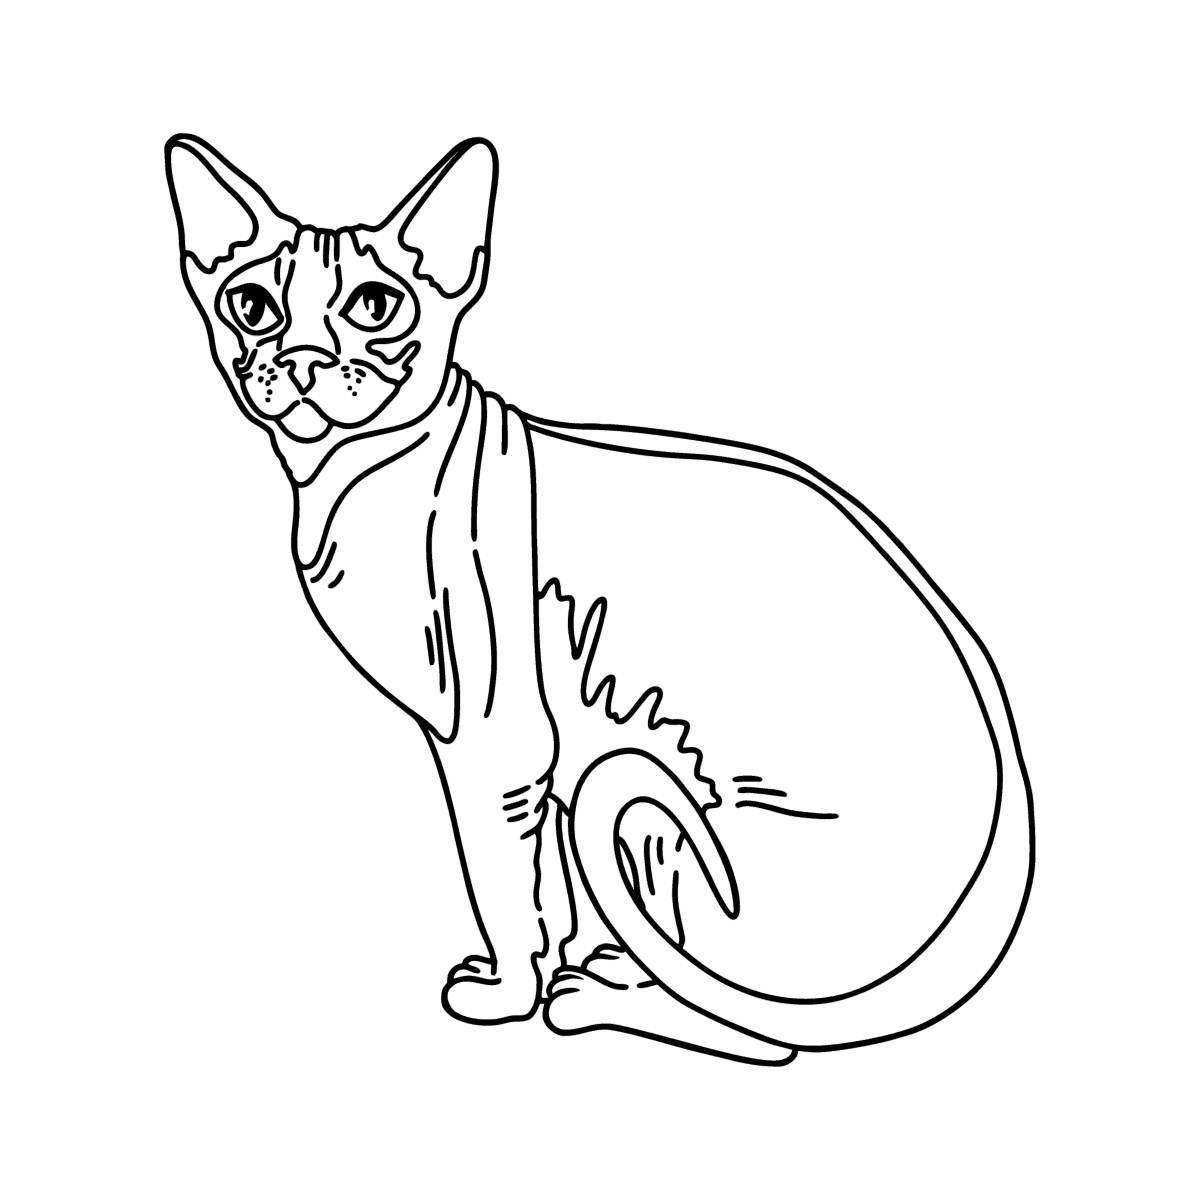 Красочная страница раскраски кота-сфинкса